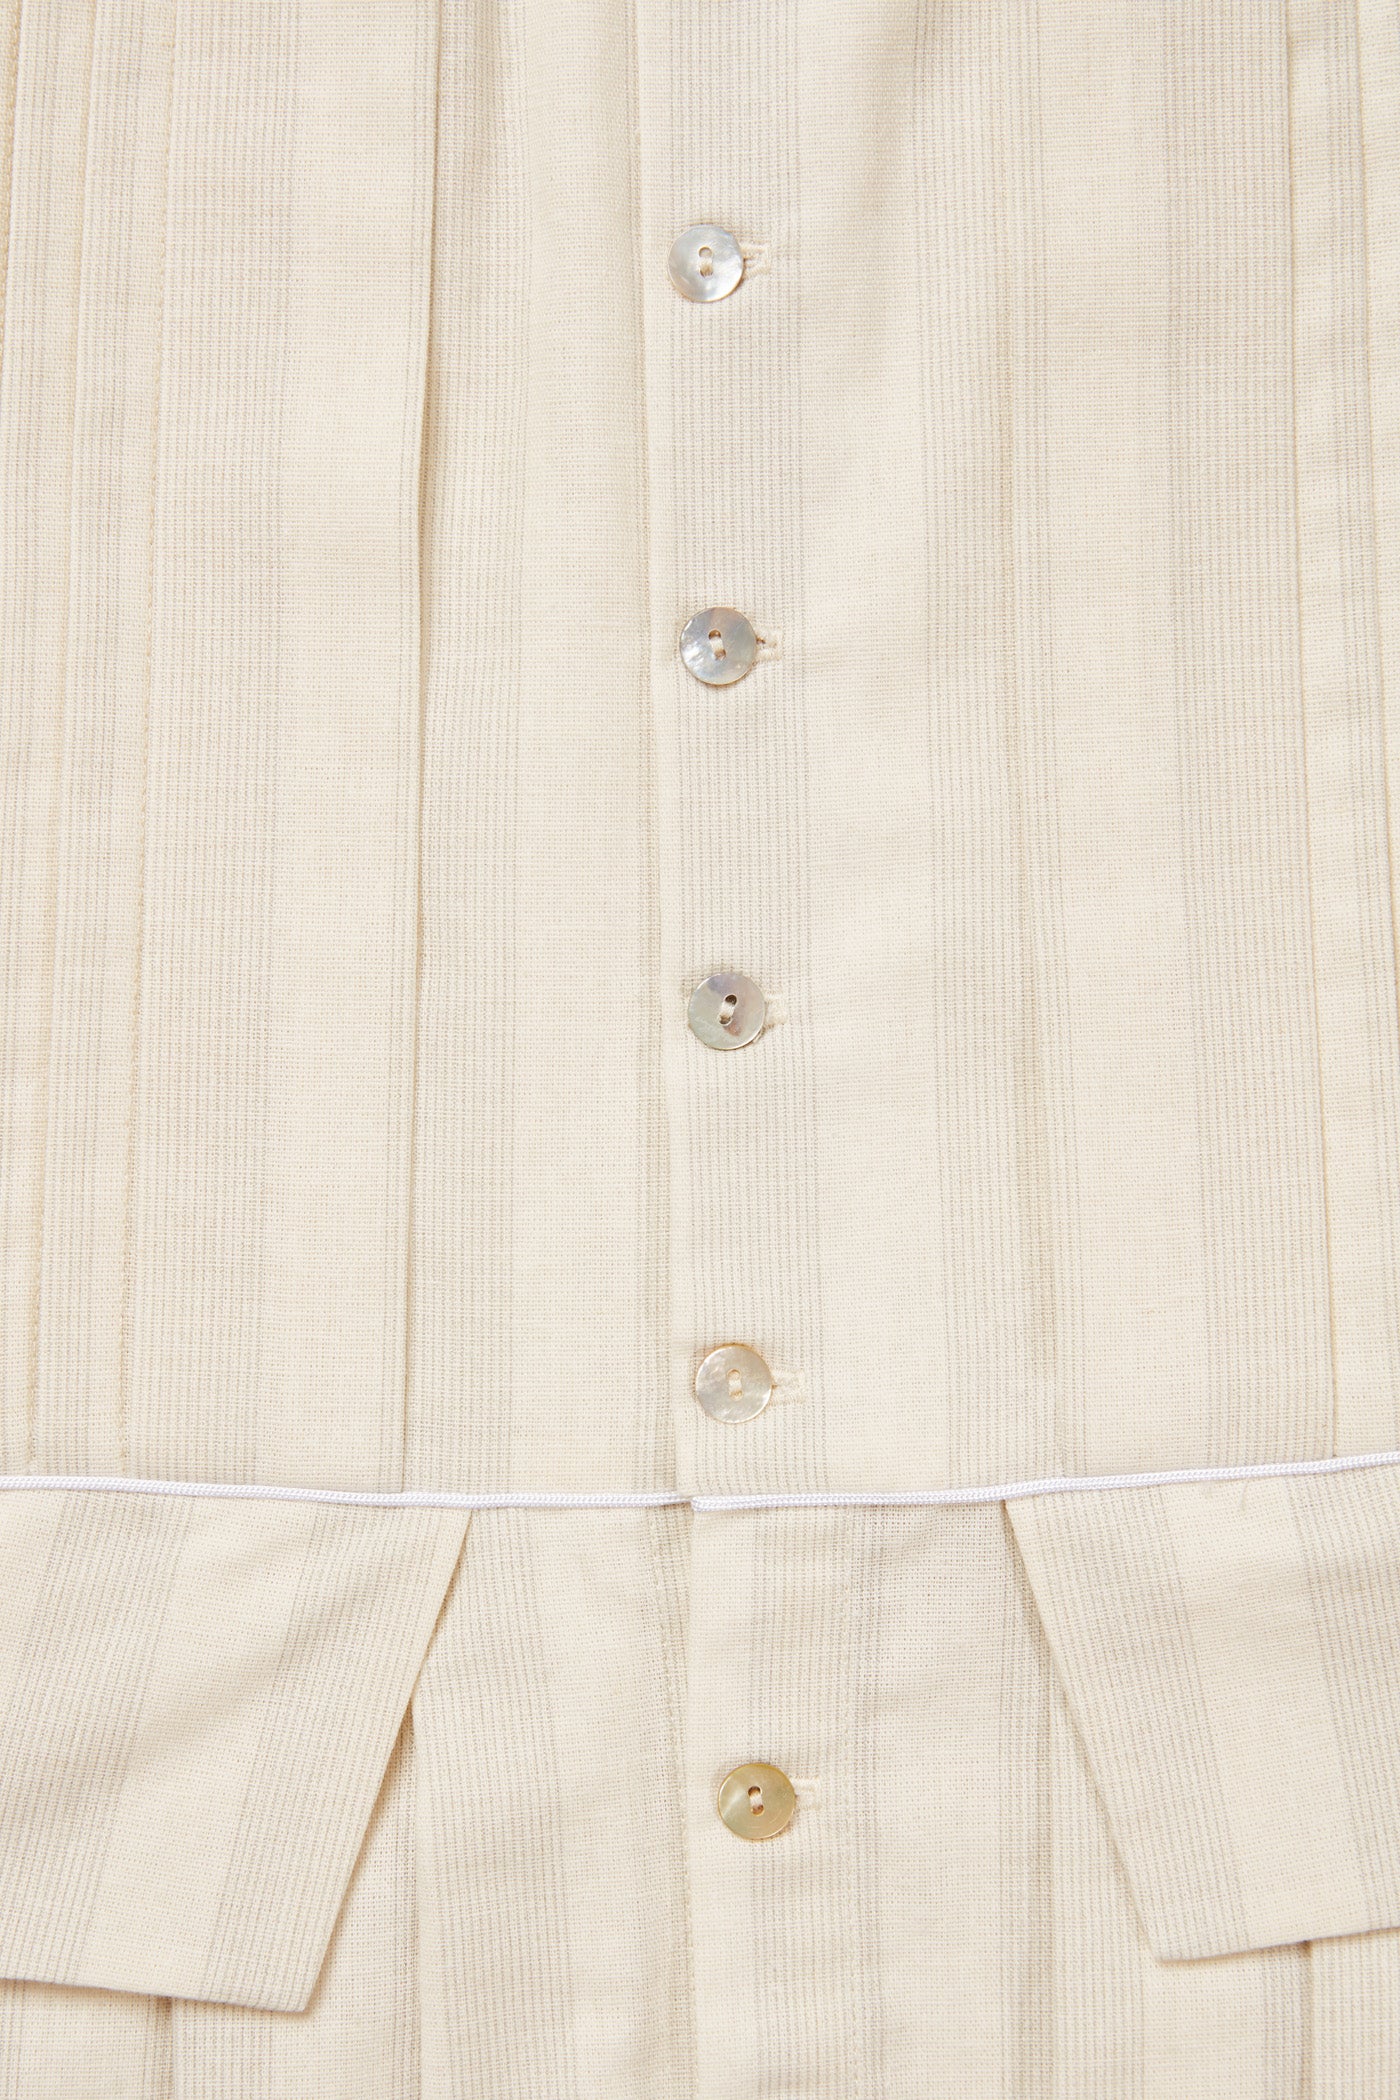 Pretzel Dress in Pale Cream and Grey Stripe